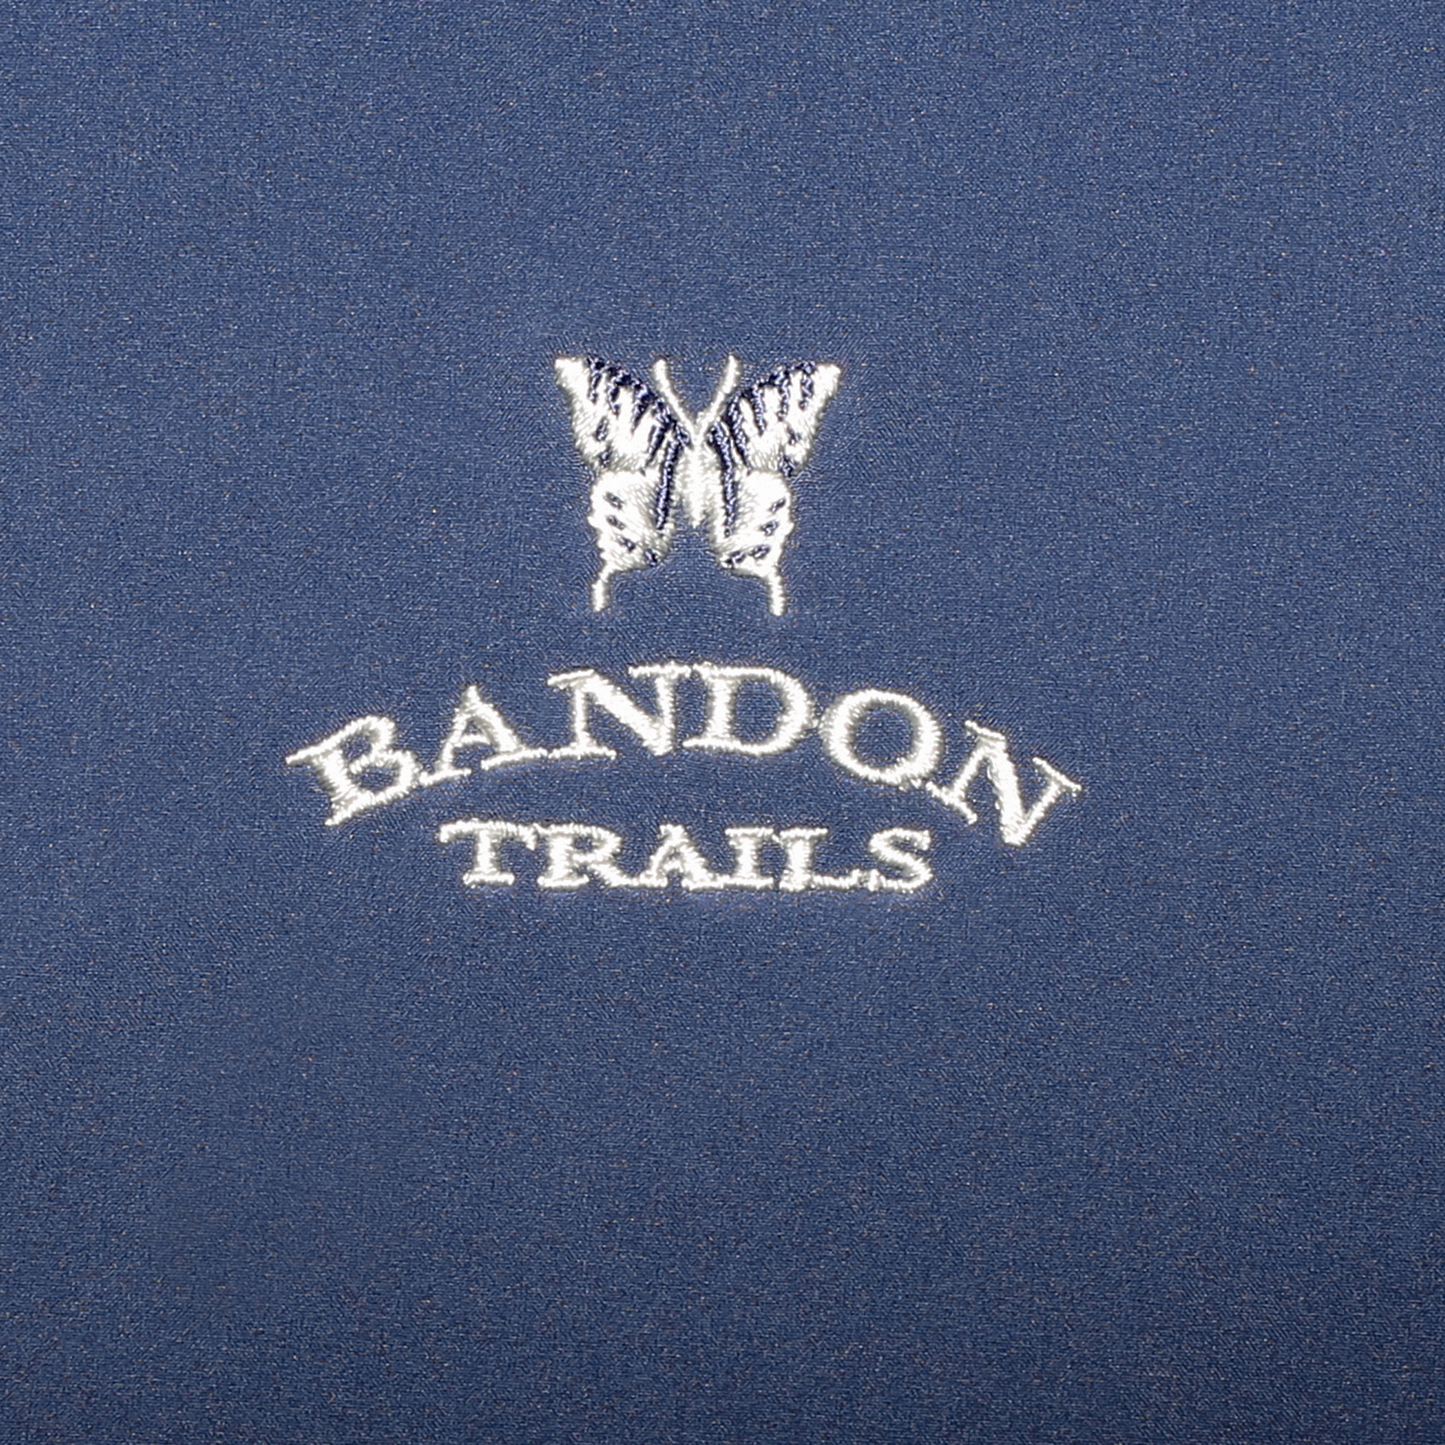 Champ Full Zip Hoodie - Bandon Trails